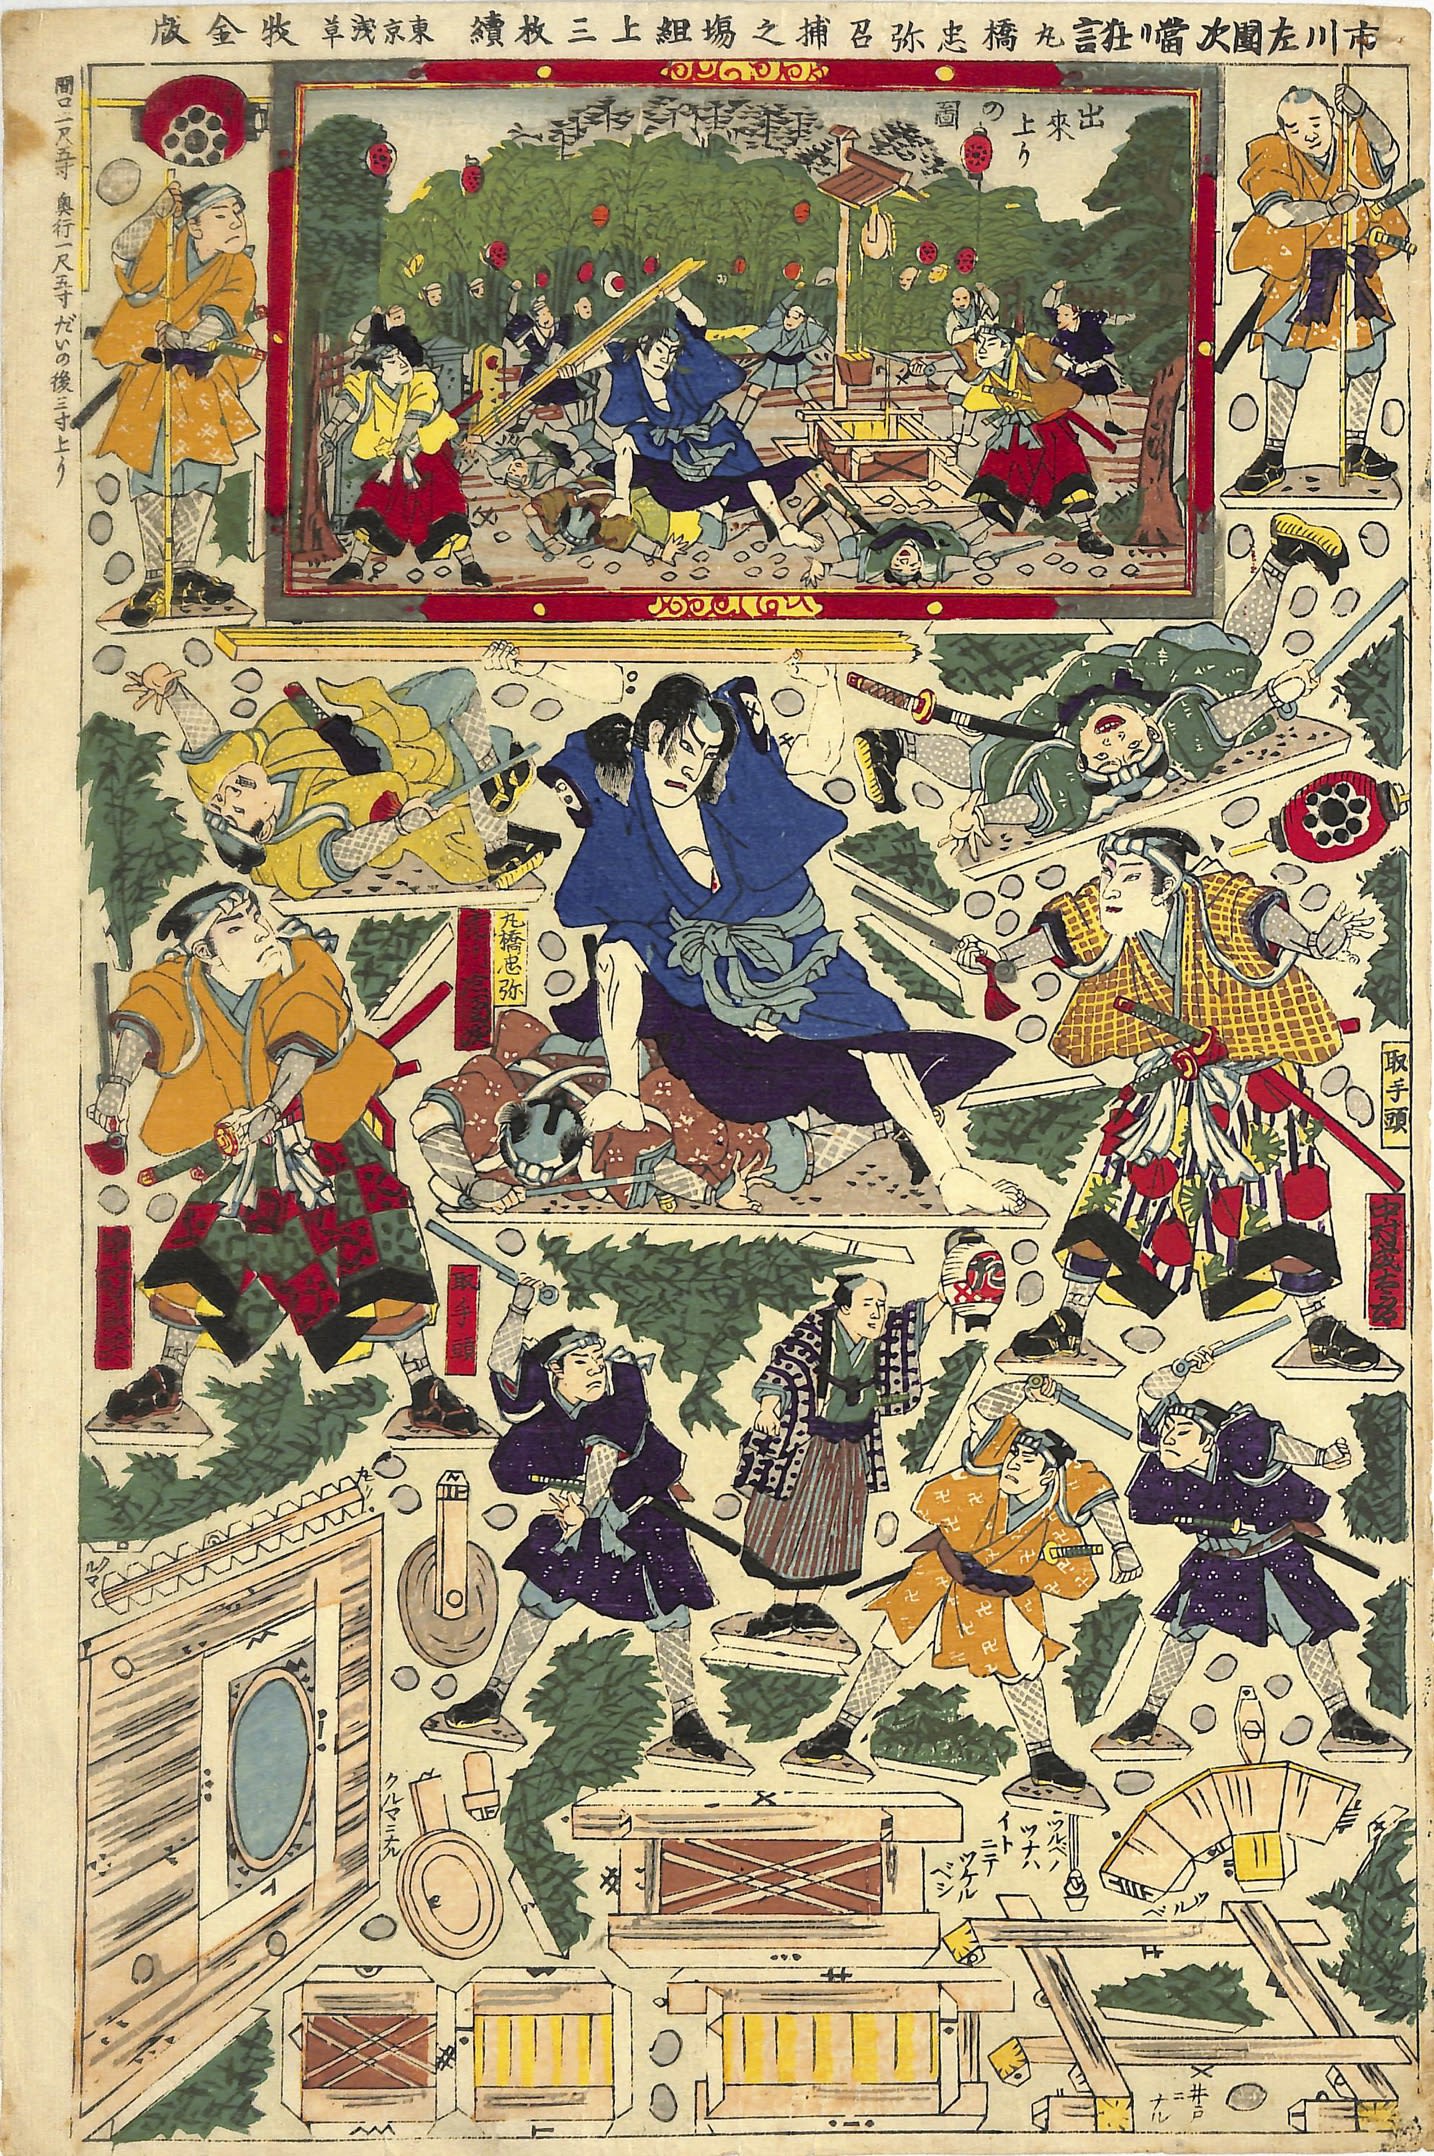 Studio of Kinnosuke Maki, 市川左団次當り狂言丸橋忠弥召捕之場, 1894 